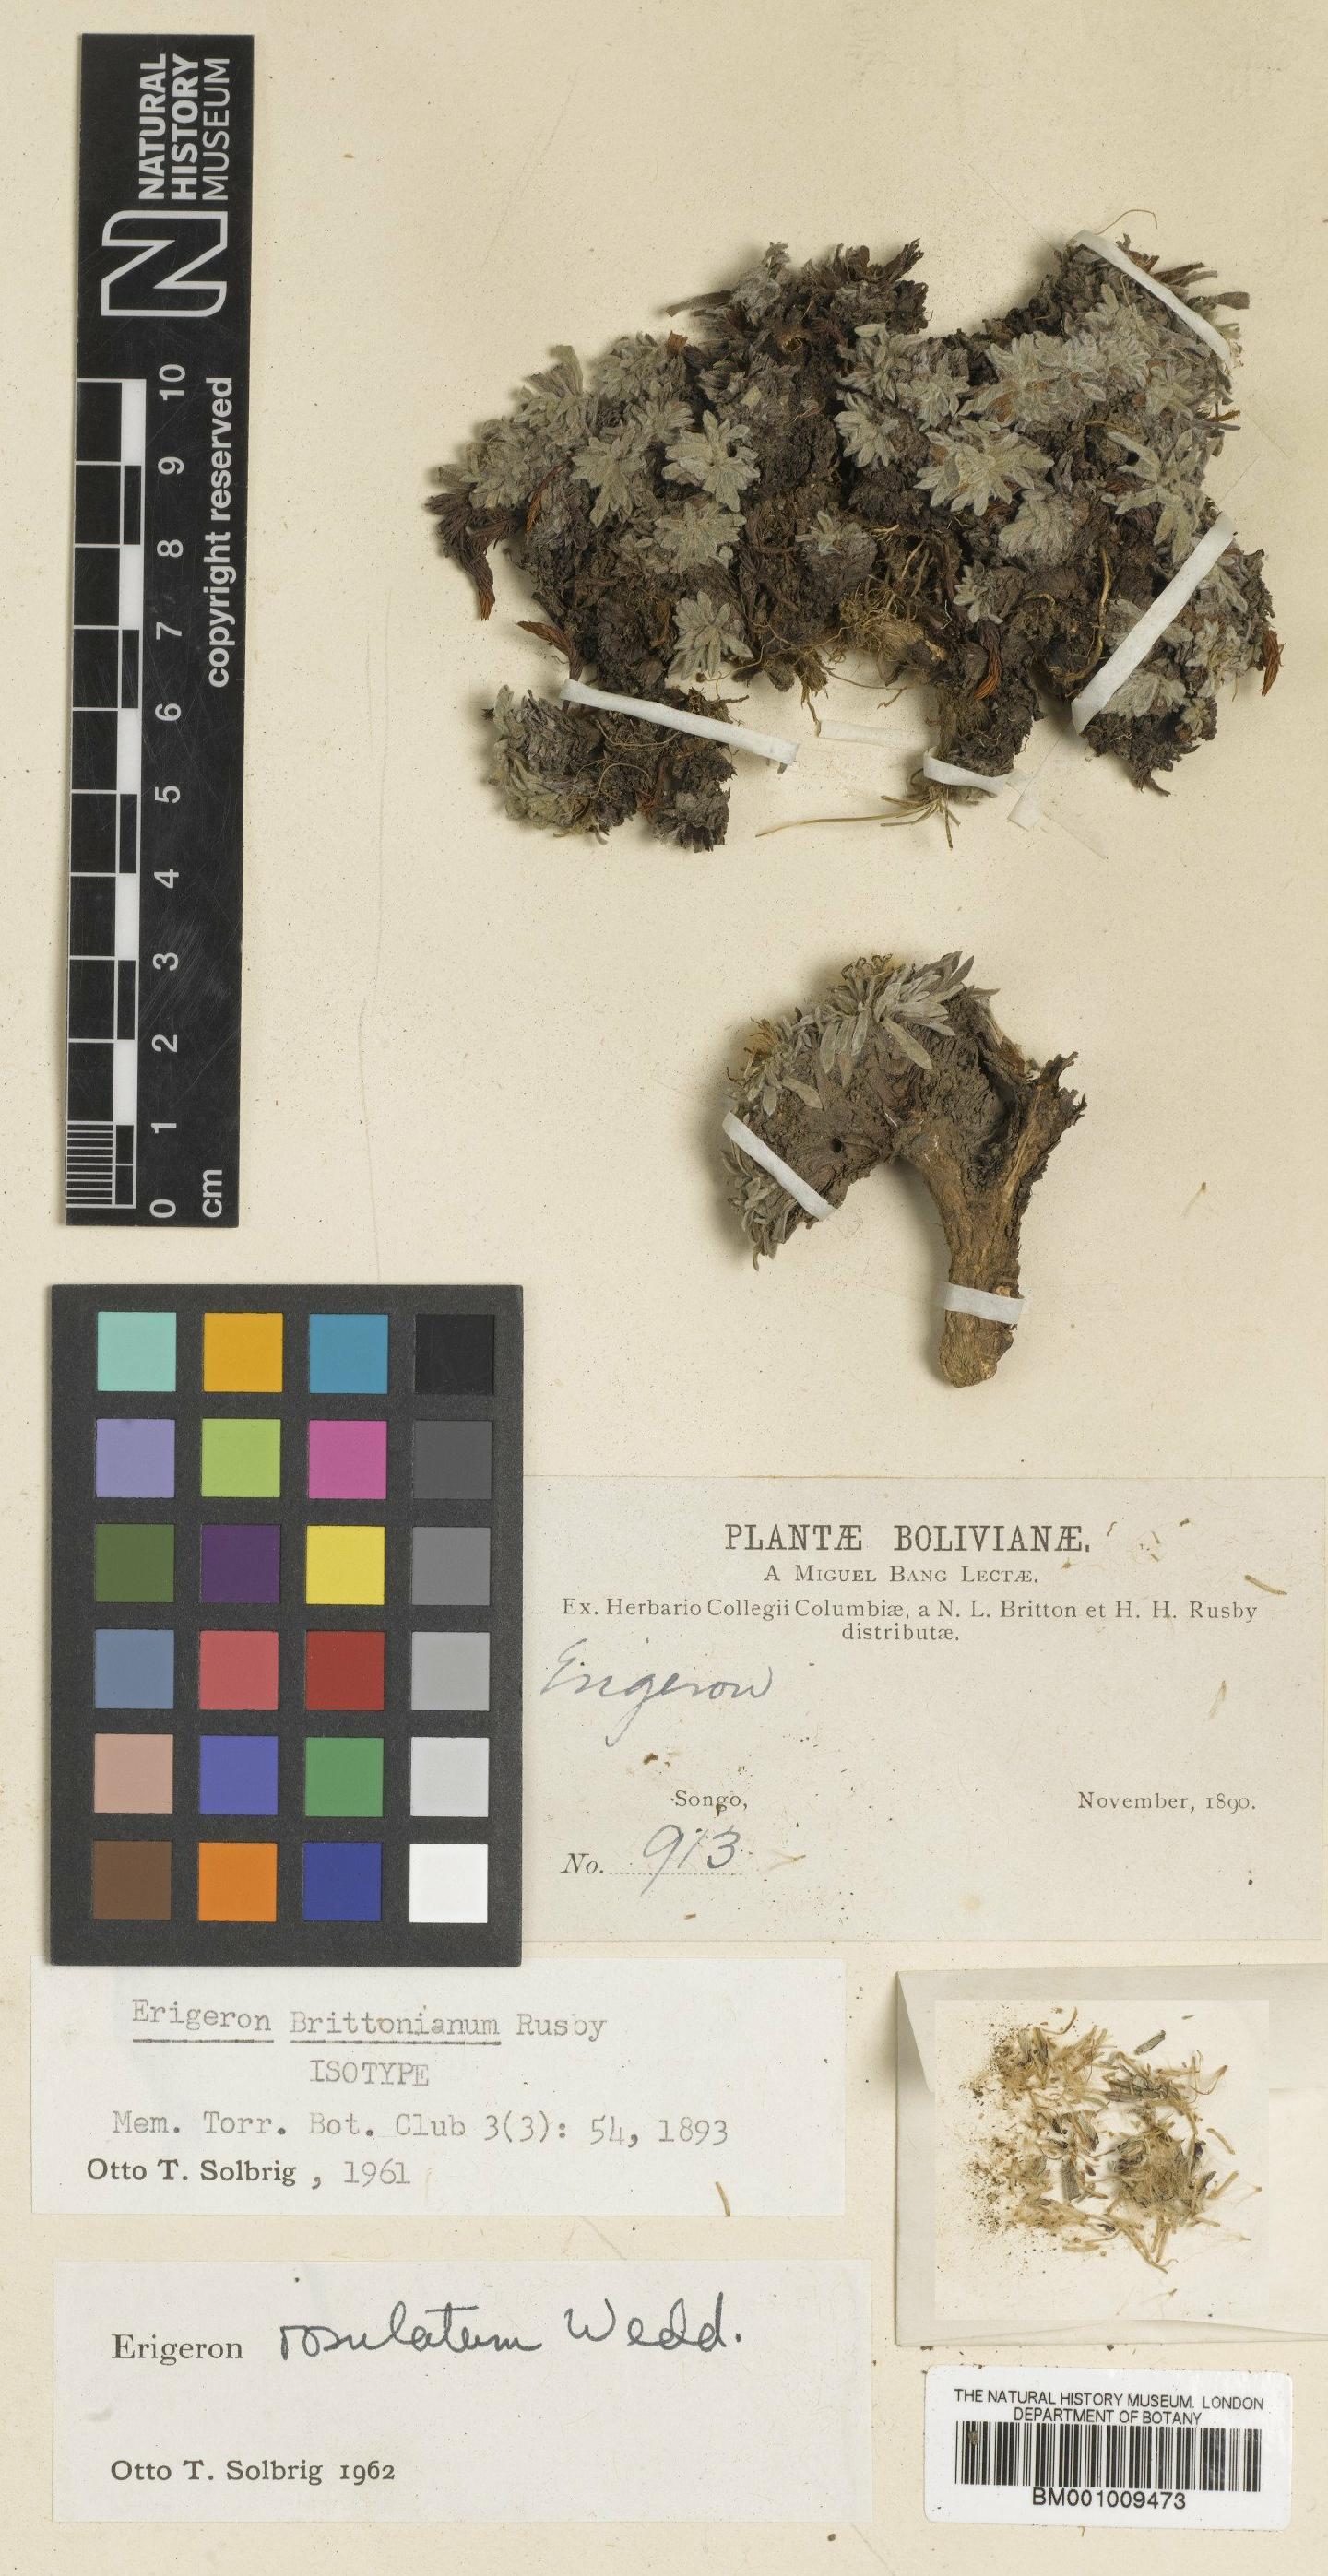 To NHMUK collection (Erigeron rosulatus Wedd.; Isotype; NHMUK:ecatalogue:610982)